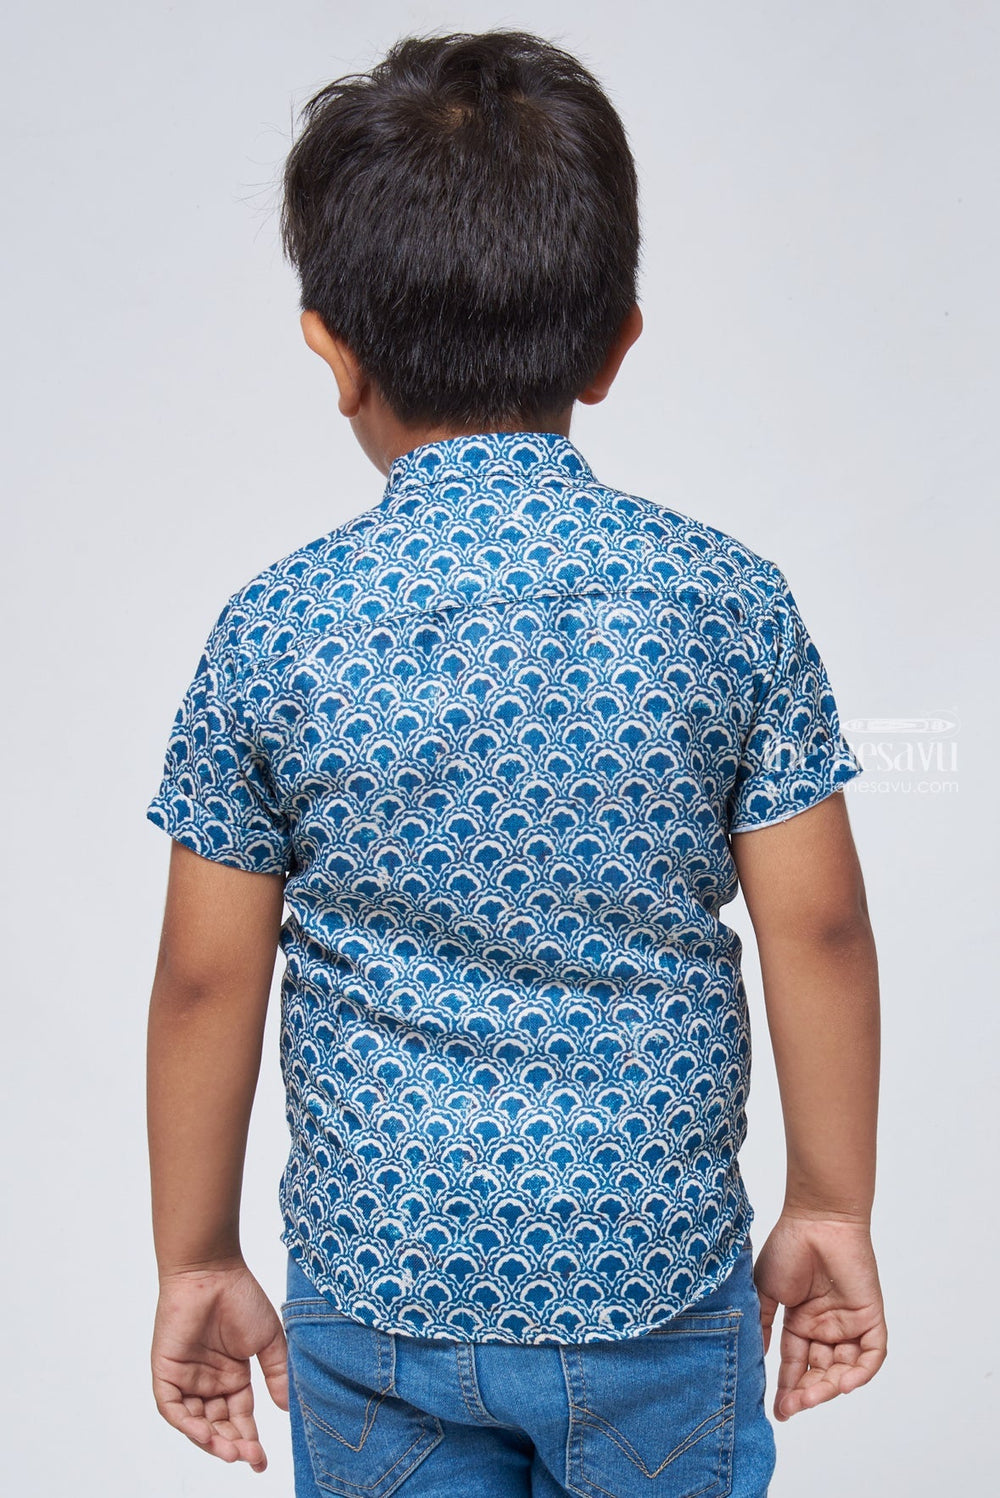 The Nesavu Boys Linen Shirt Vintage Indigo: Linen Boys' Shirt with Retro-Inspired Prints for a Nostalgic Feel Nesavu Retro-Inspired Printed Shirt | Casual Shirt for Boys | The Nesavu